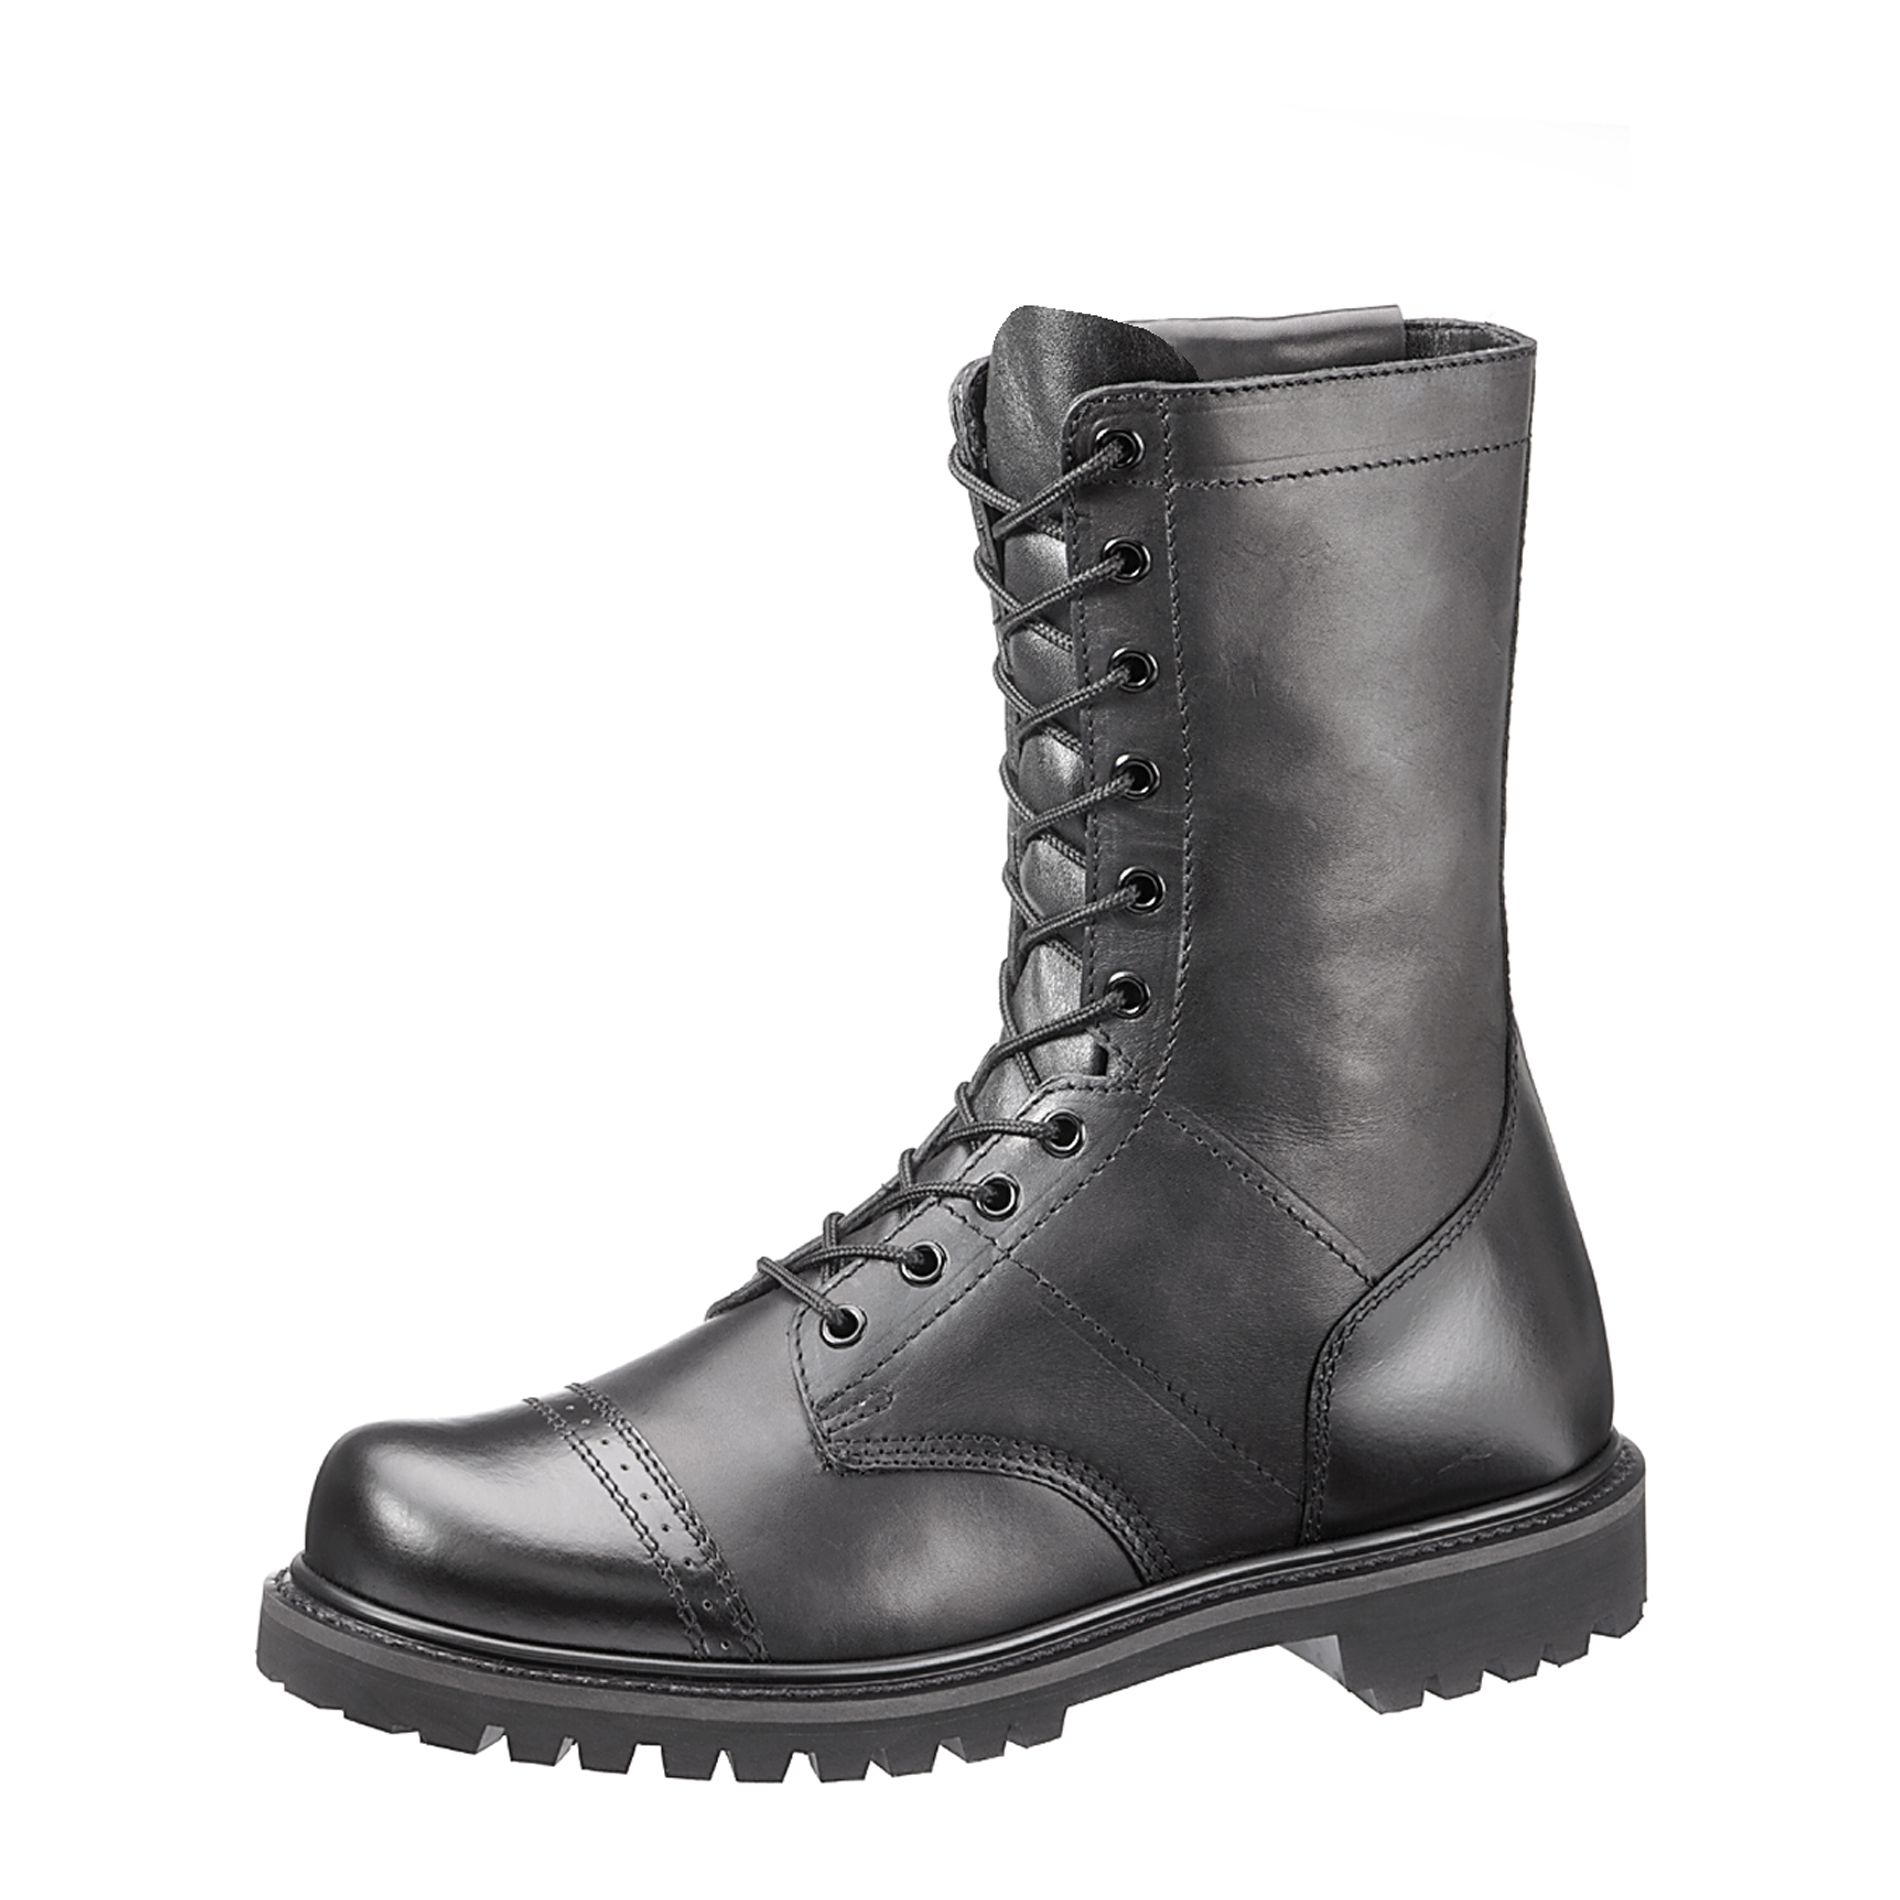 Men's Paratrooper 11" Black Side Zip Tactical Boots - Wide Width Available